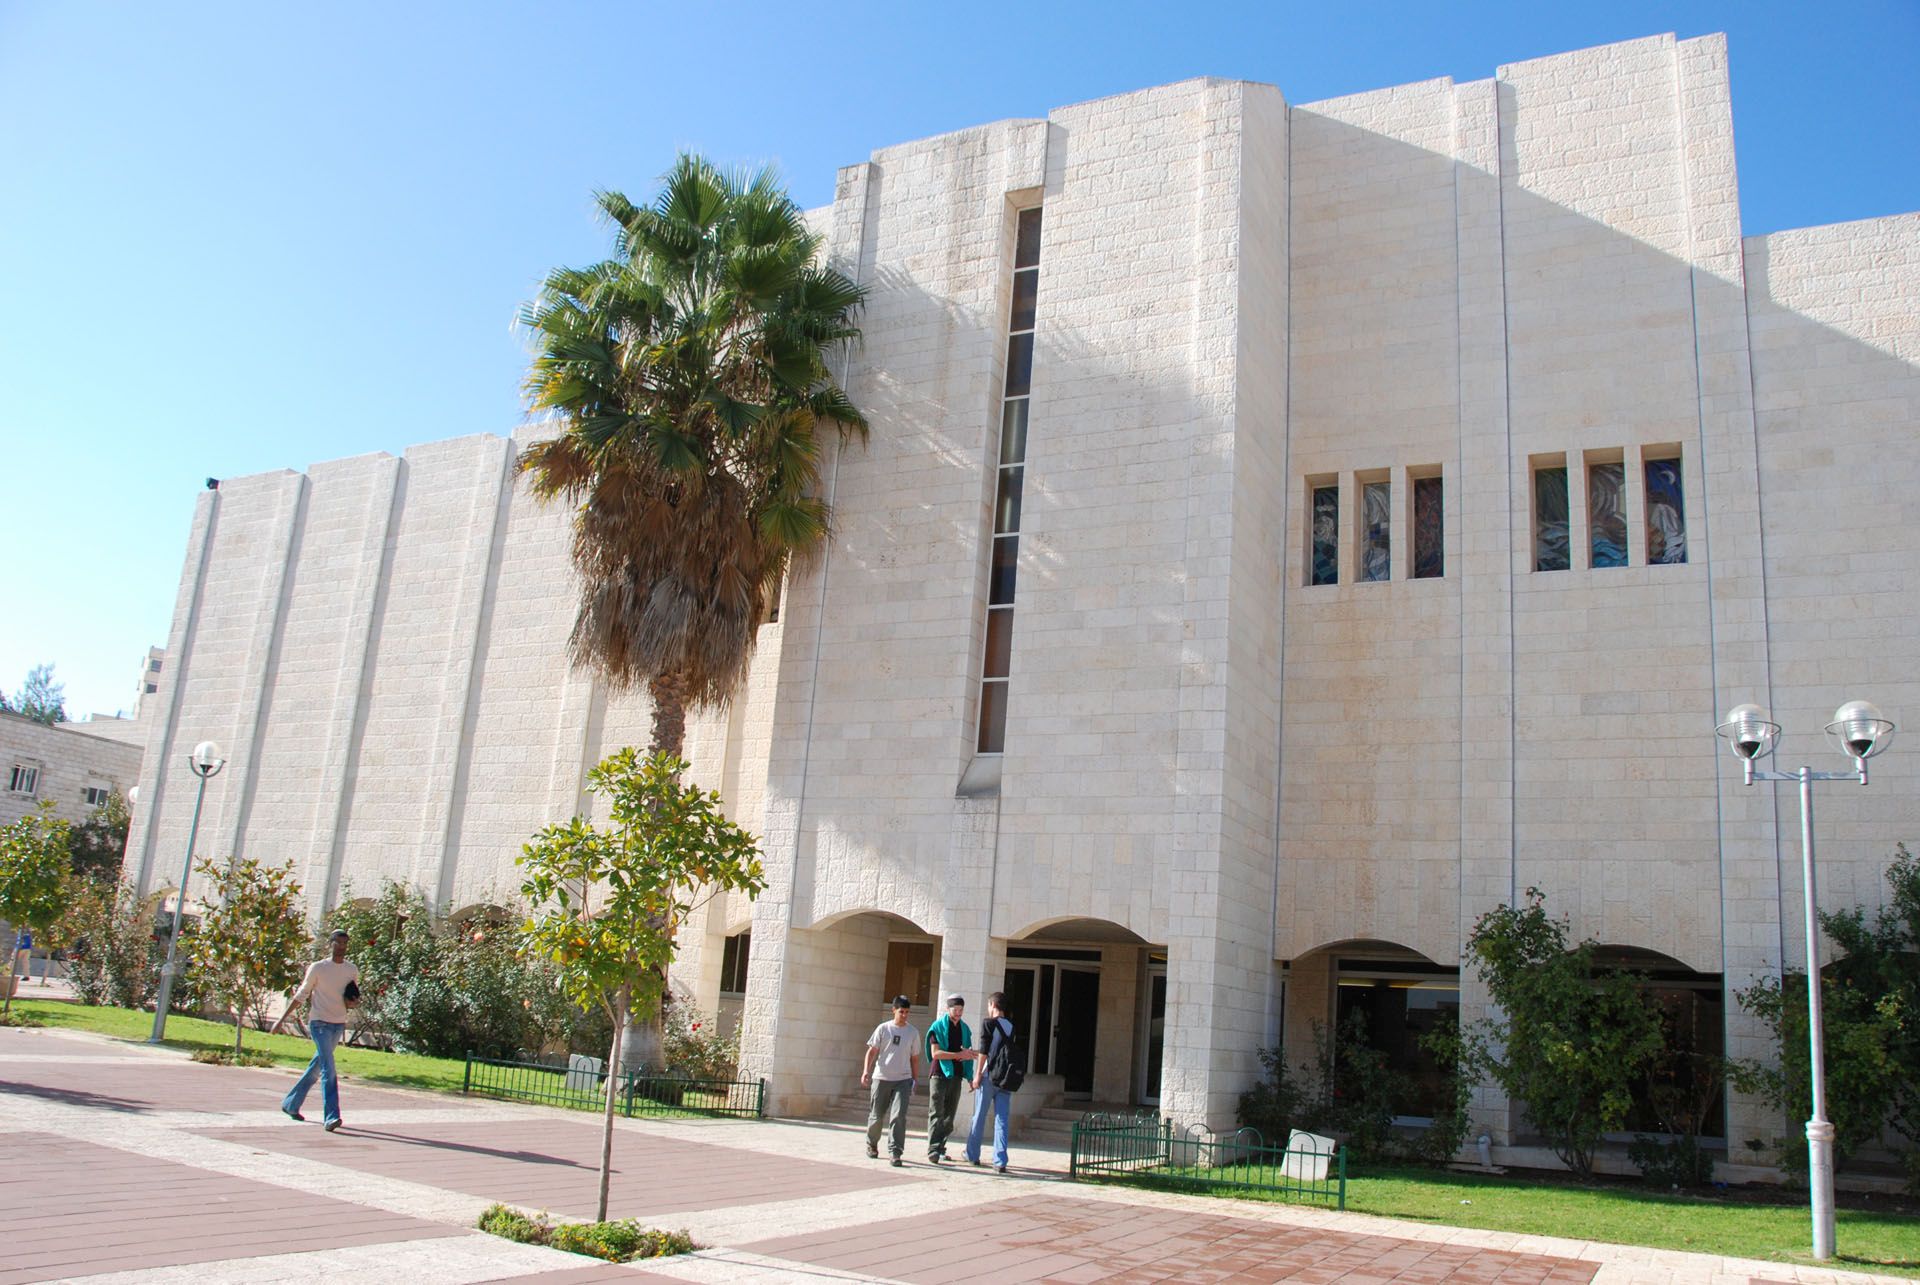 Beit Midrash Jerusalem College of Technology